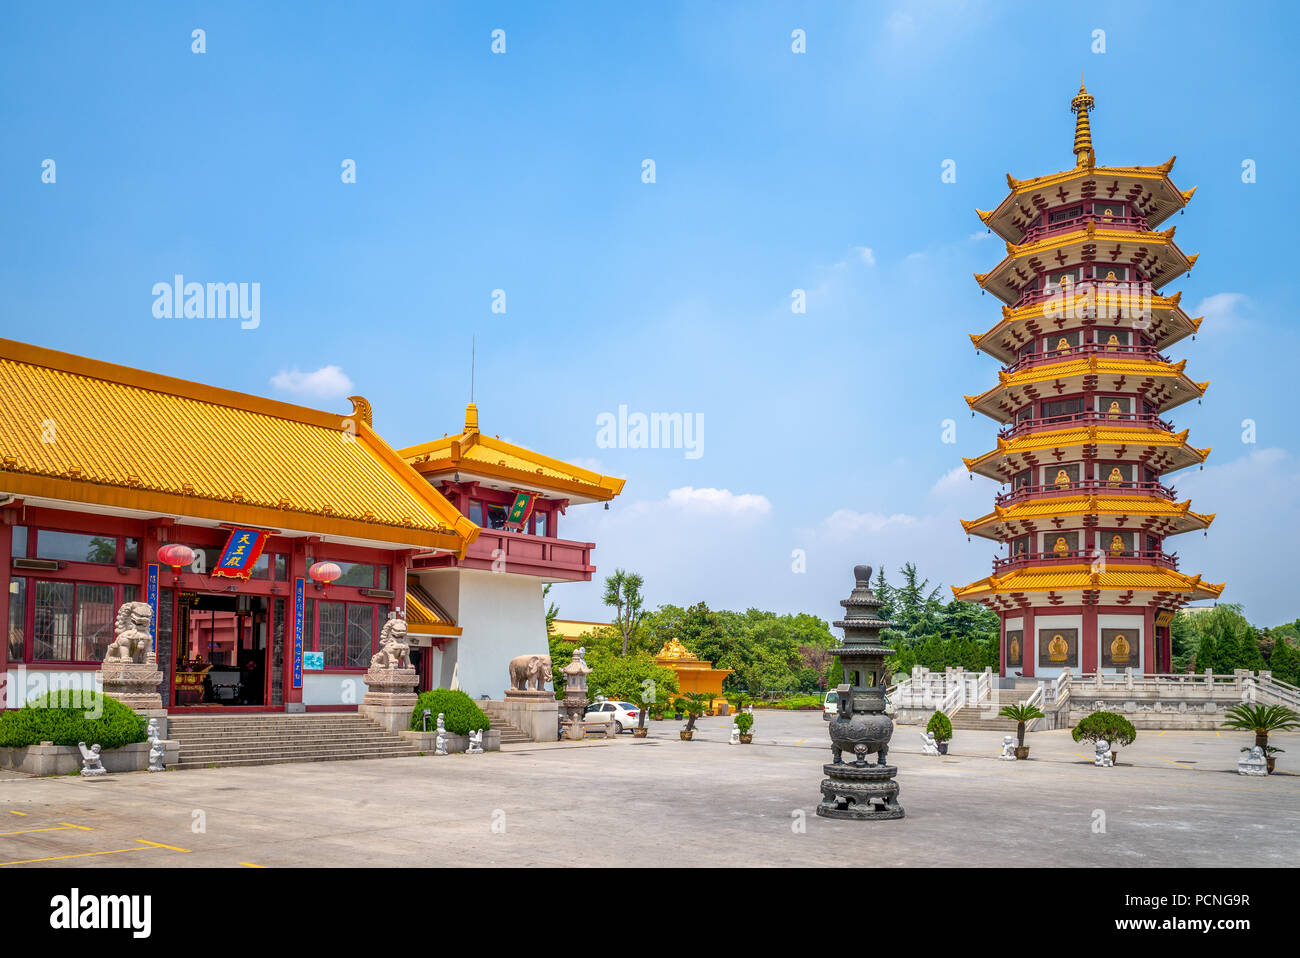 qibao temple at qibao ancient town in shanghai Stock Photo